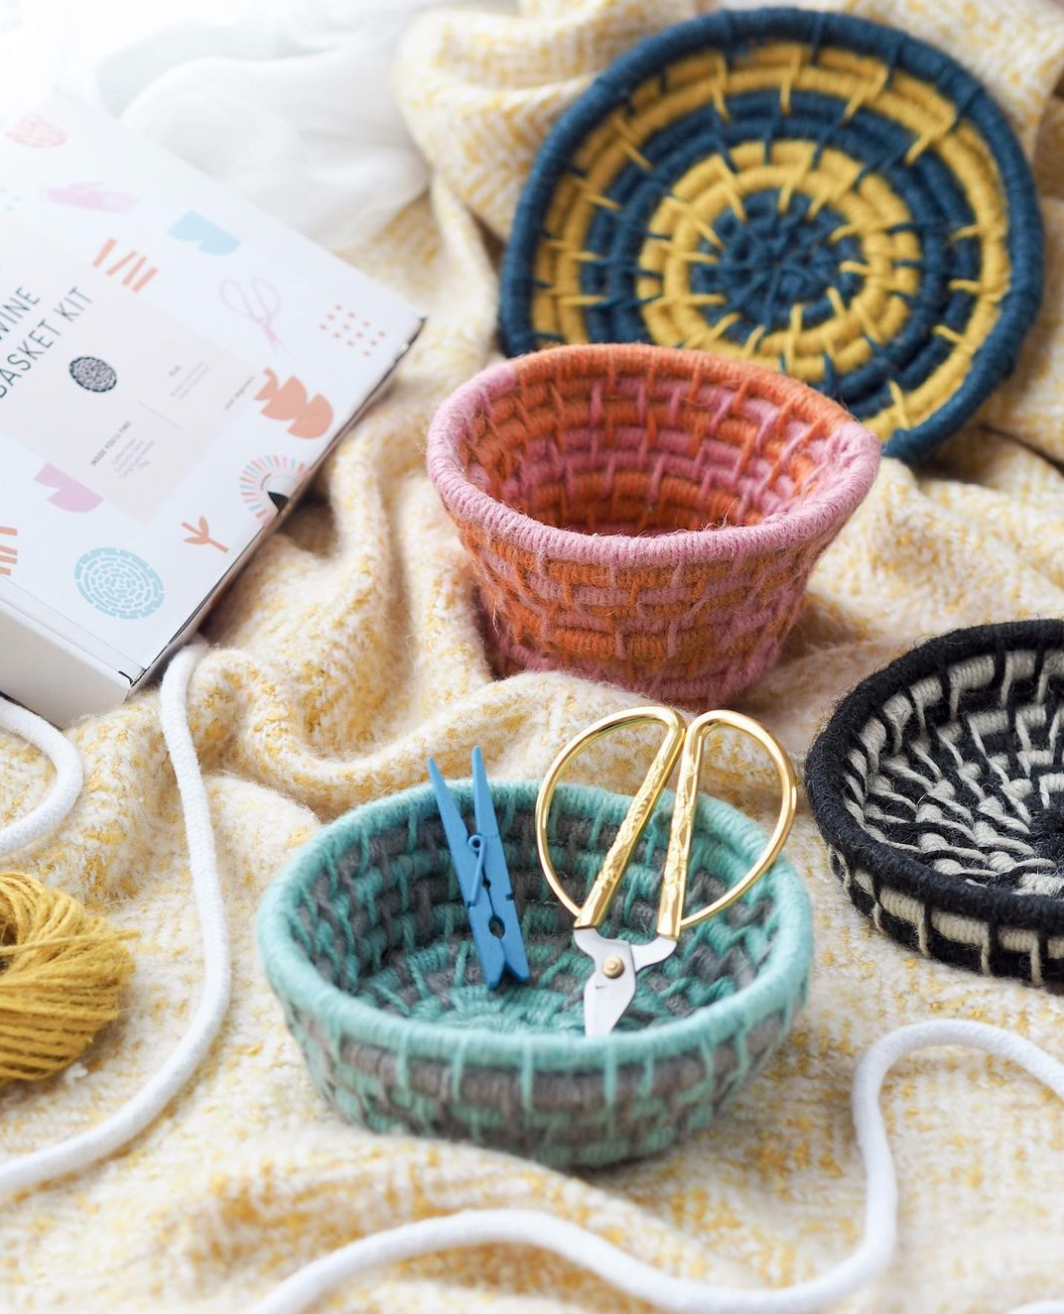 Craft kits for making mini baskets